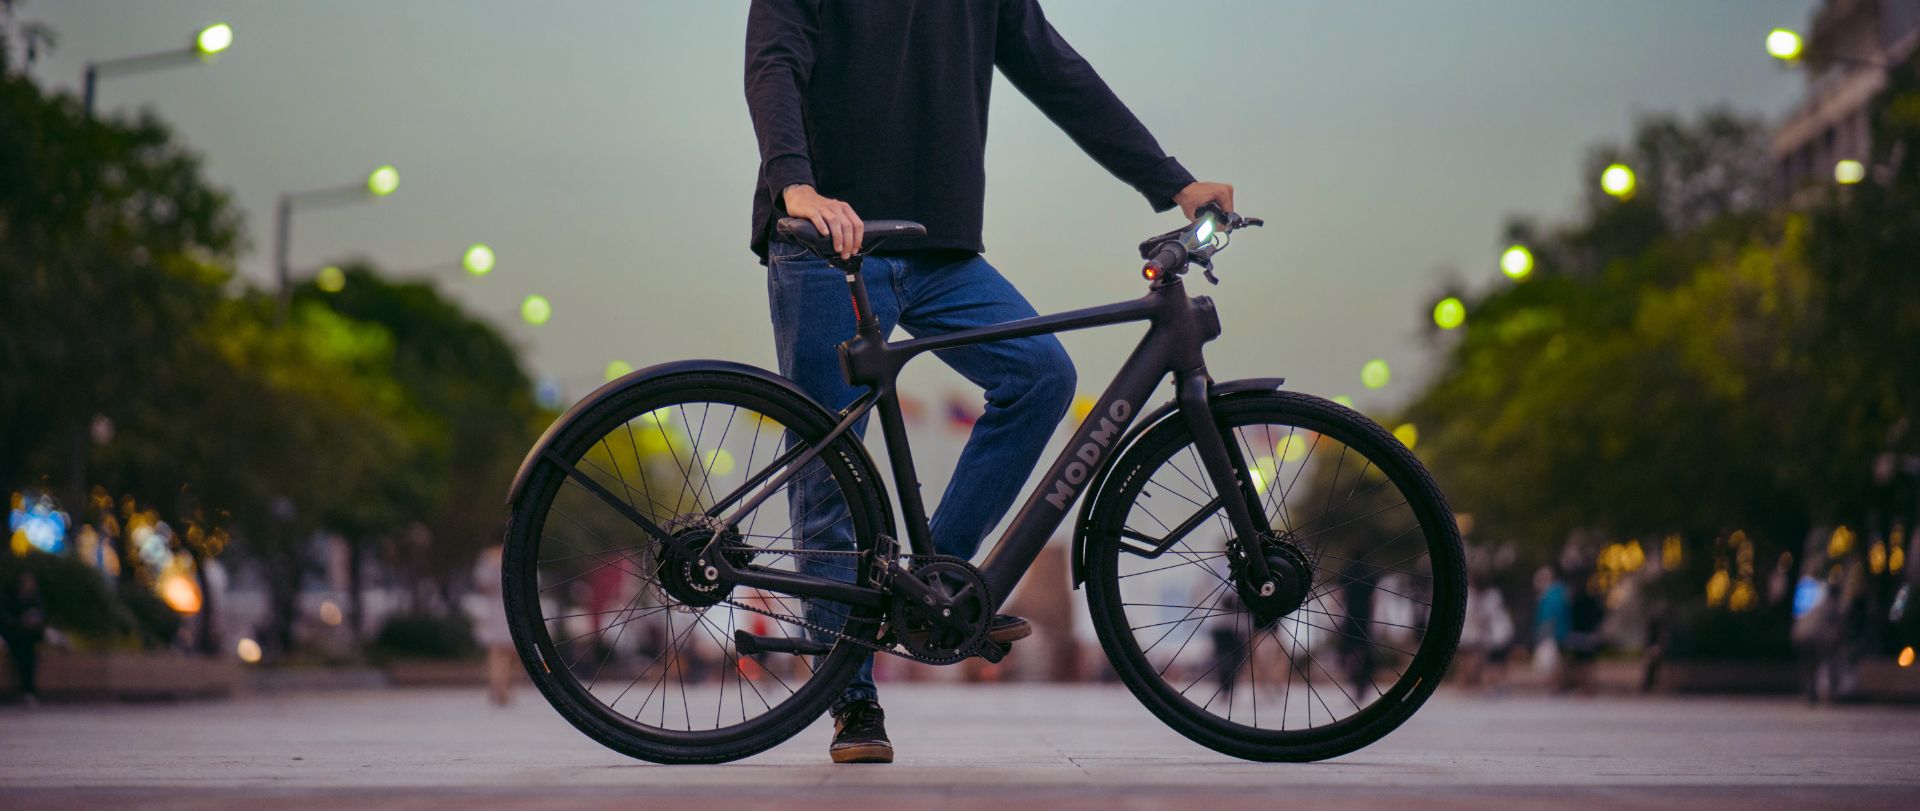 Modmo Saigon+ Electric Bicycle - RRP £2800 - Size M (Rider: 140-155cm) - Image 4 of 14